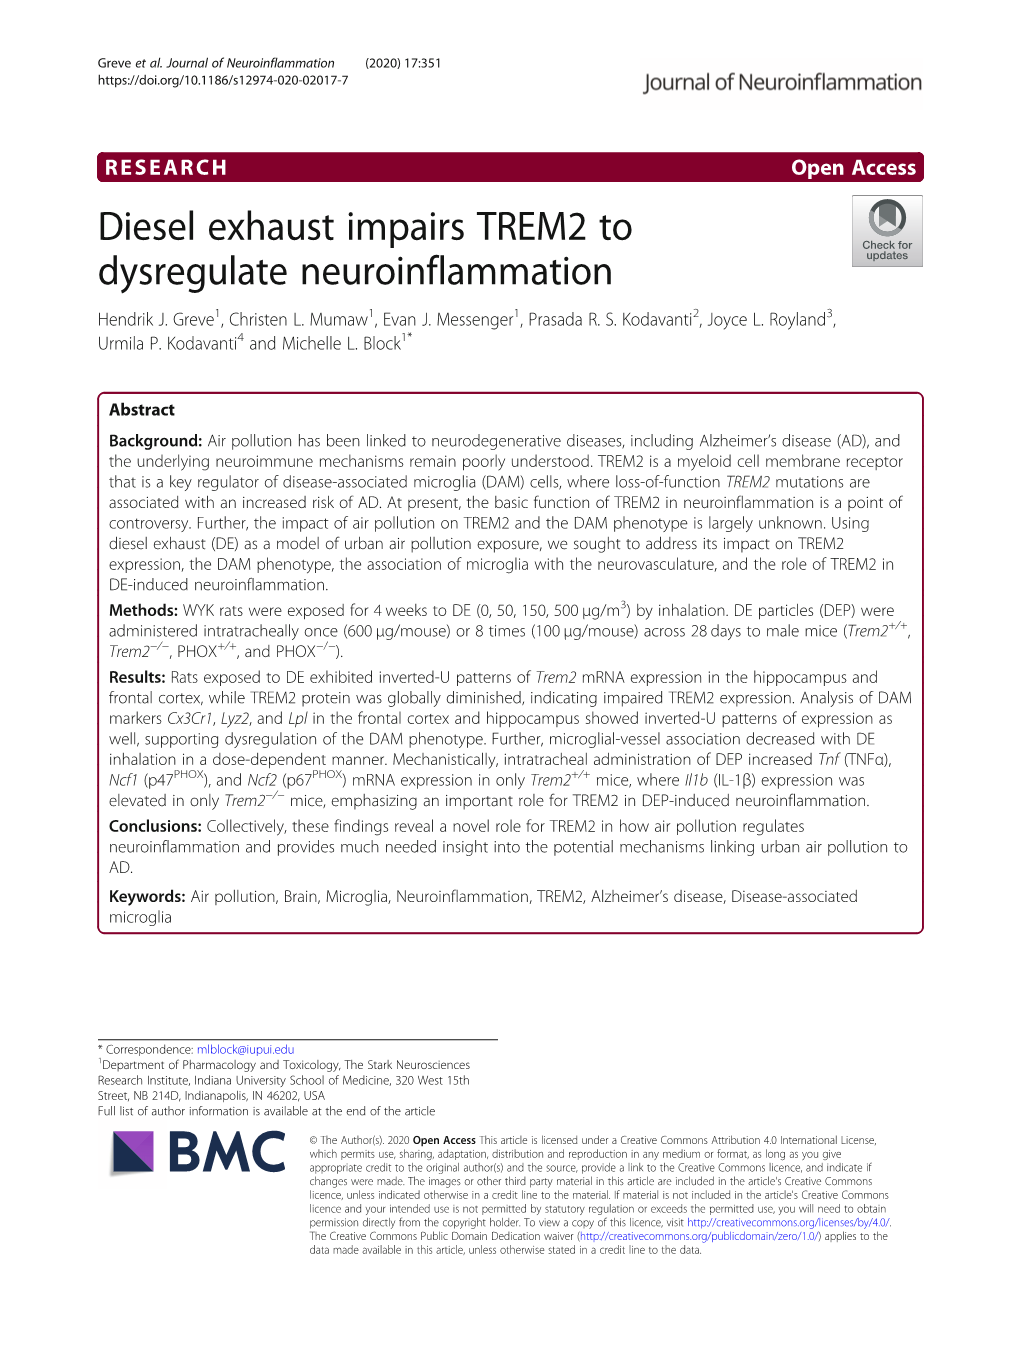 Diesel Exhaust Impairs TREM2 to Dysregulate Neuroinflammation Hendrik J